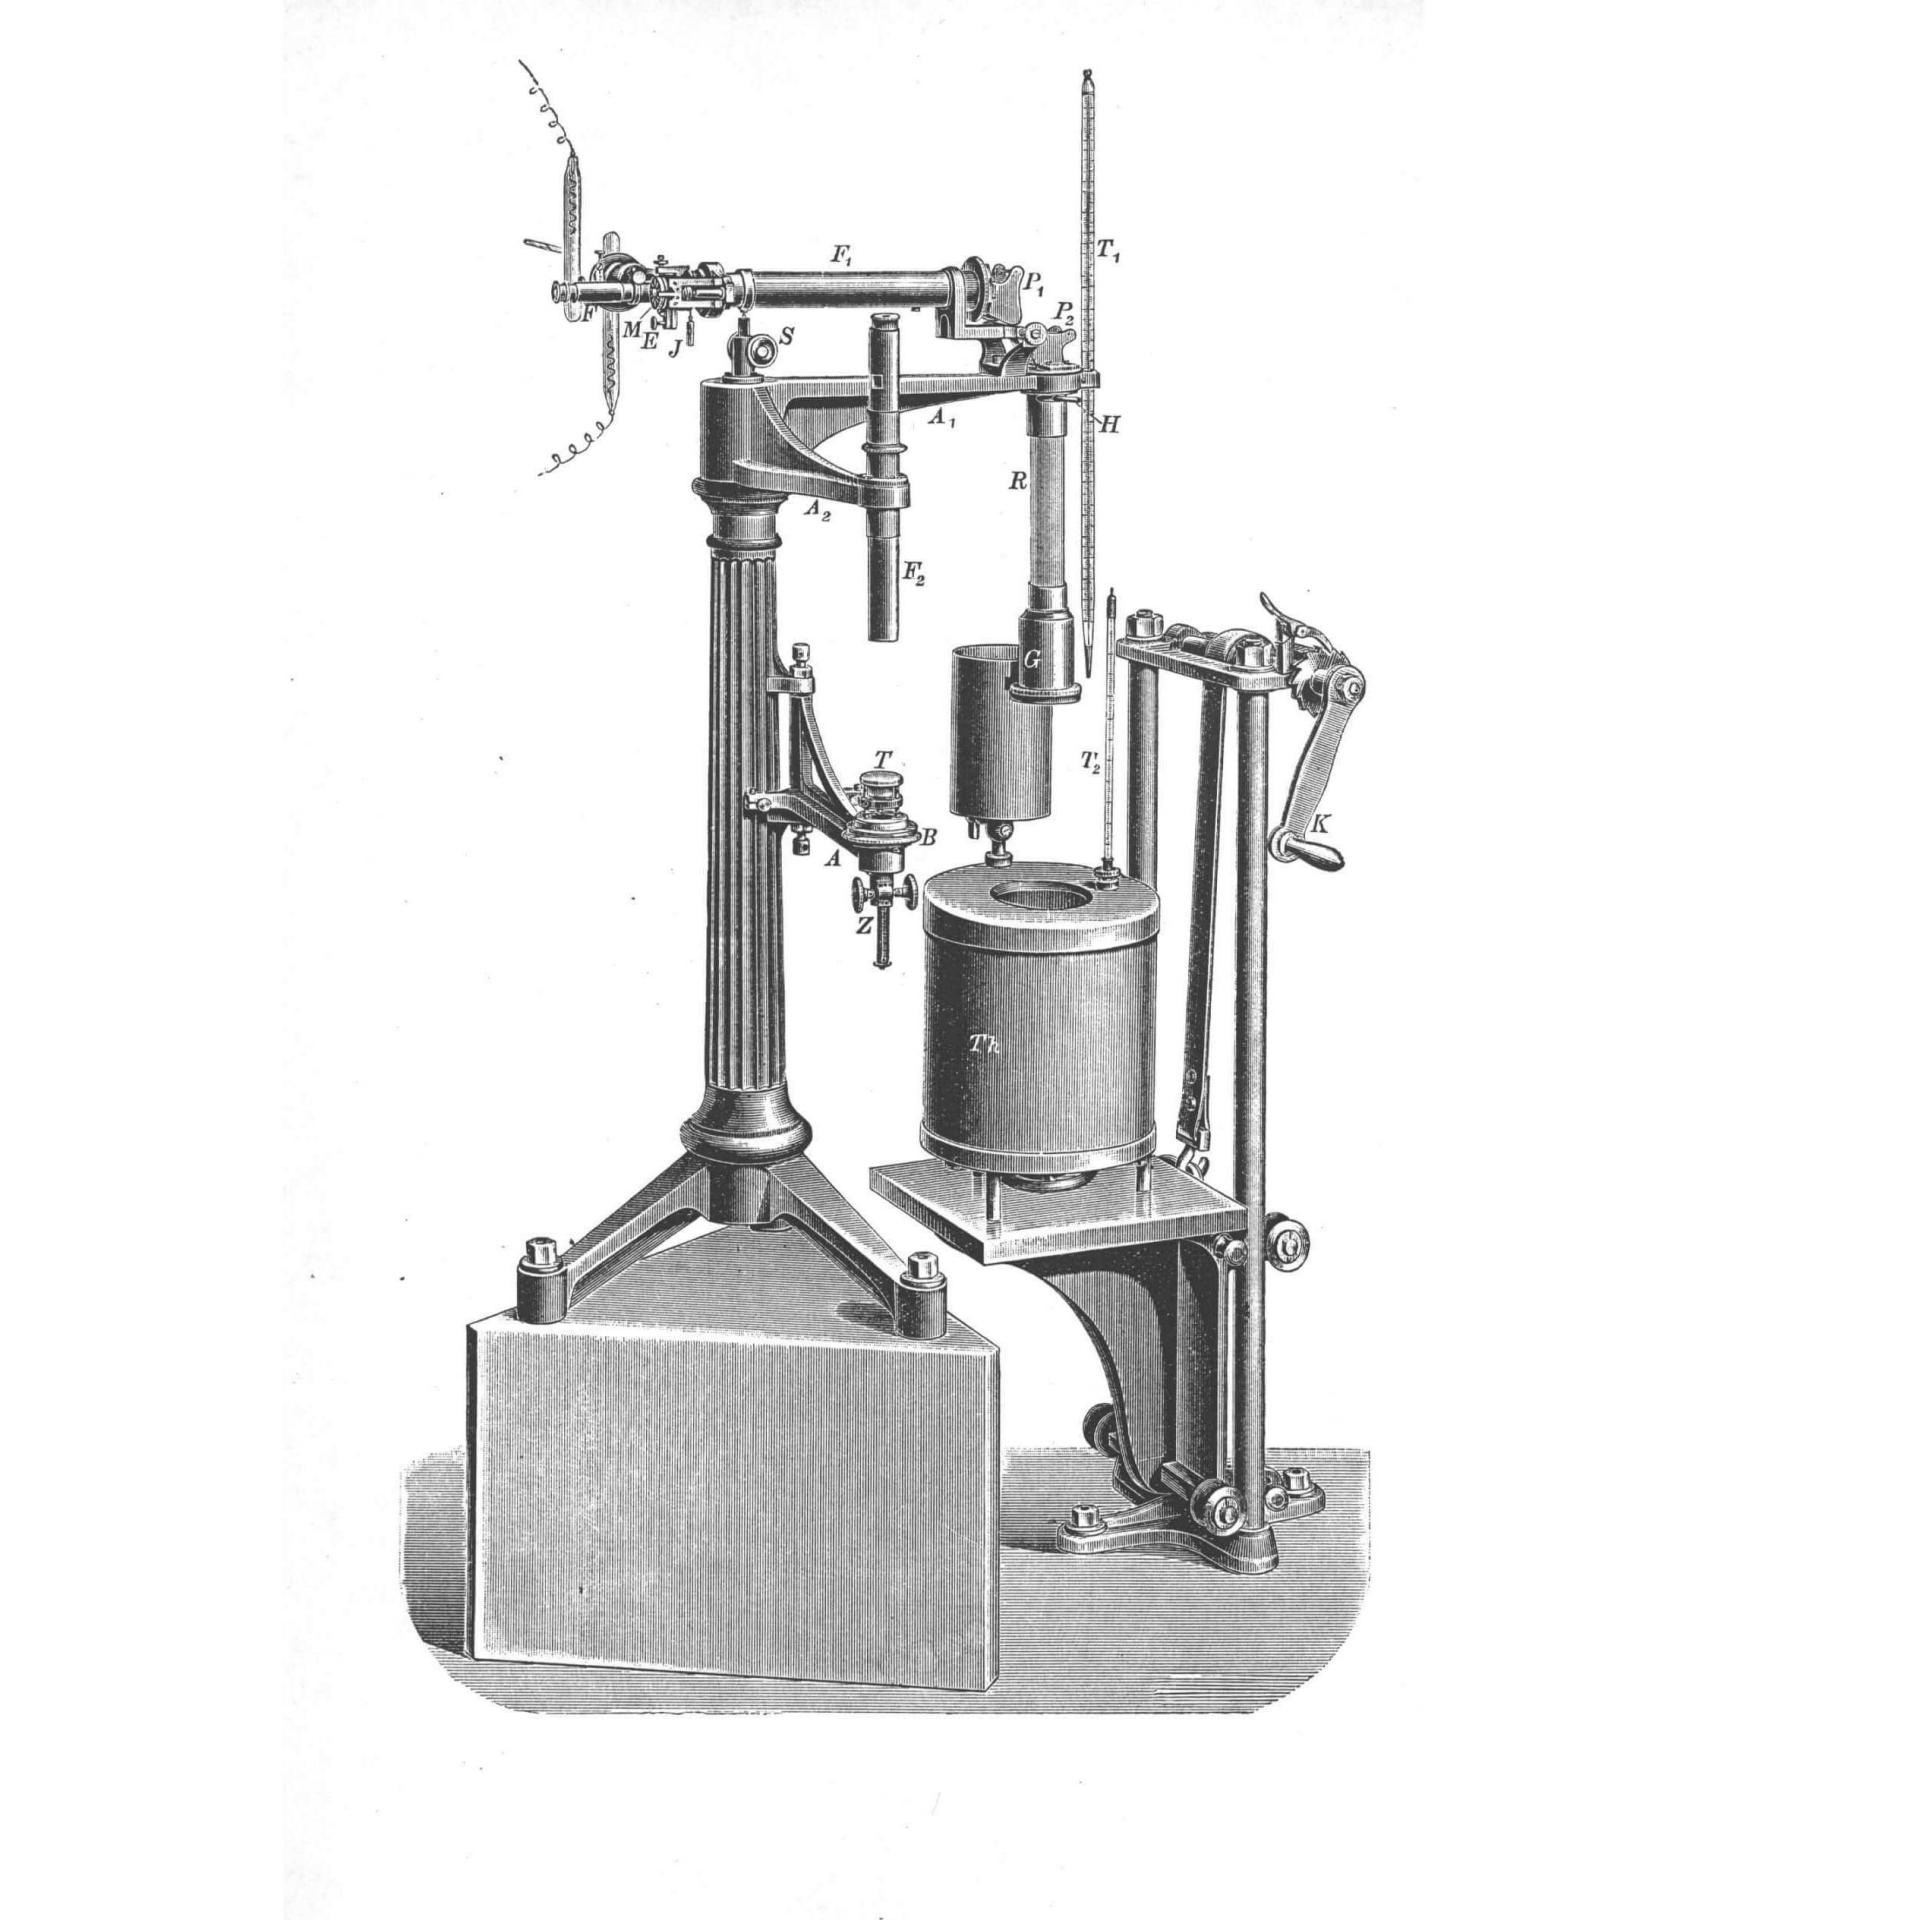 Abbe’s dilatometer, 1893.